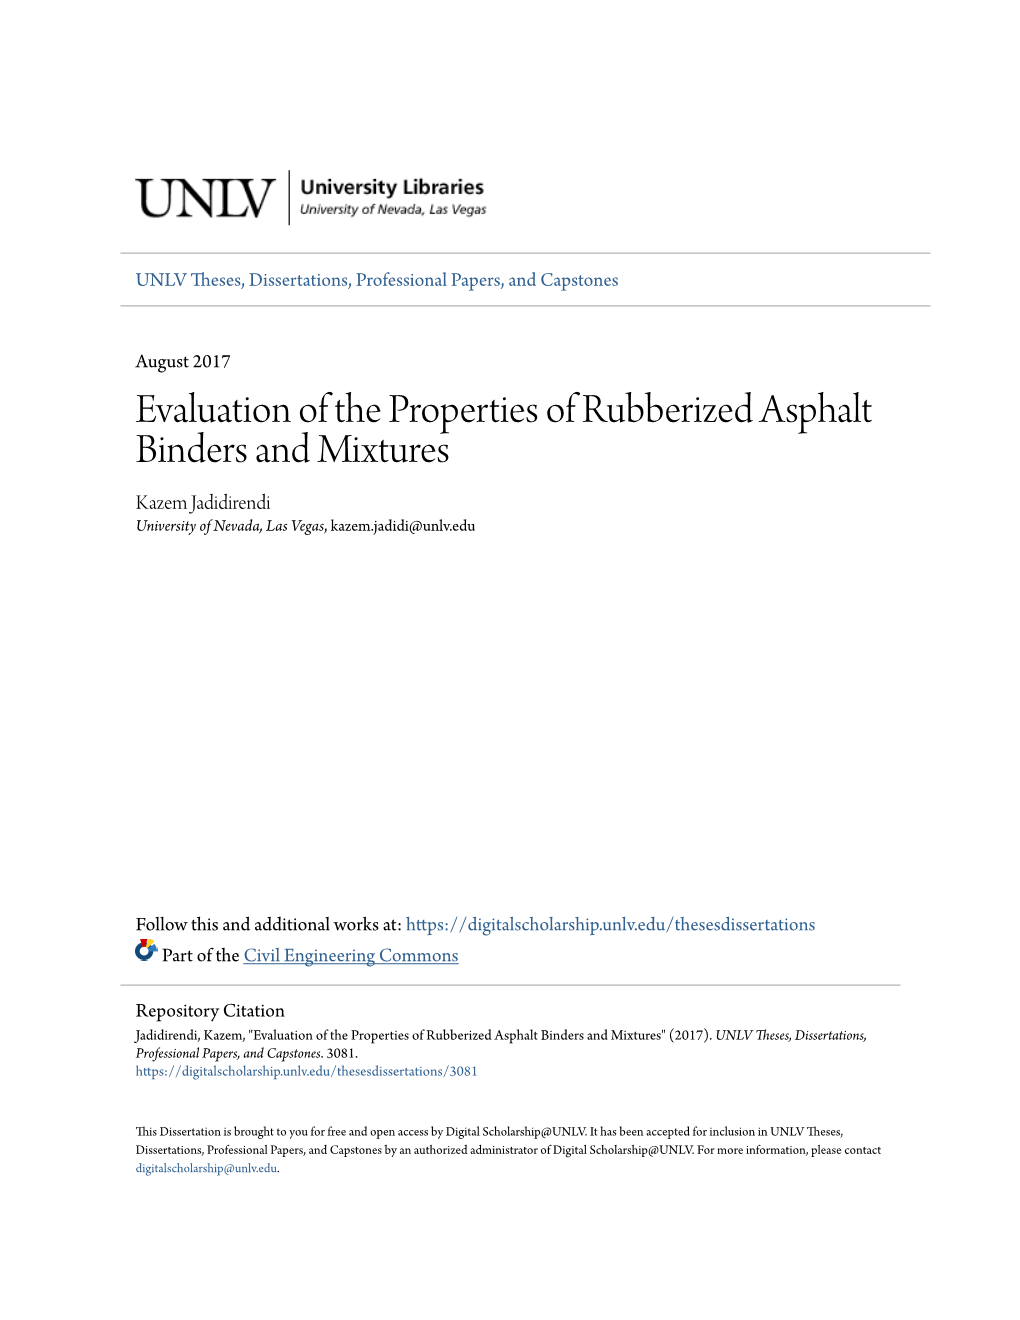 Evaluation of the Properties of Rubberized Asphalt Binders and Mixtures Kazem Jadidirendi University of Nevada, Las Vegas, Kazem.Jadidi@Unlv.Edu